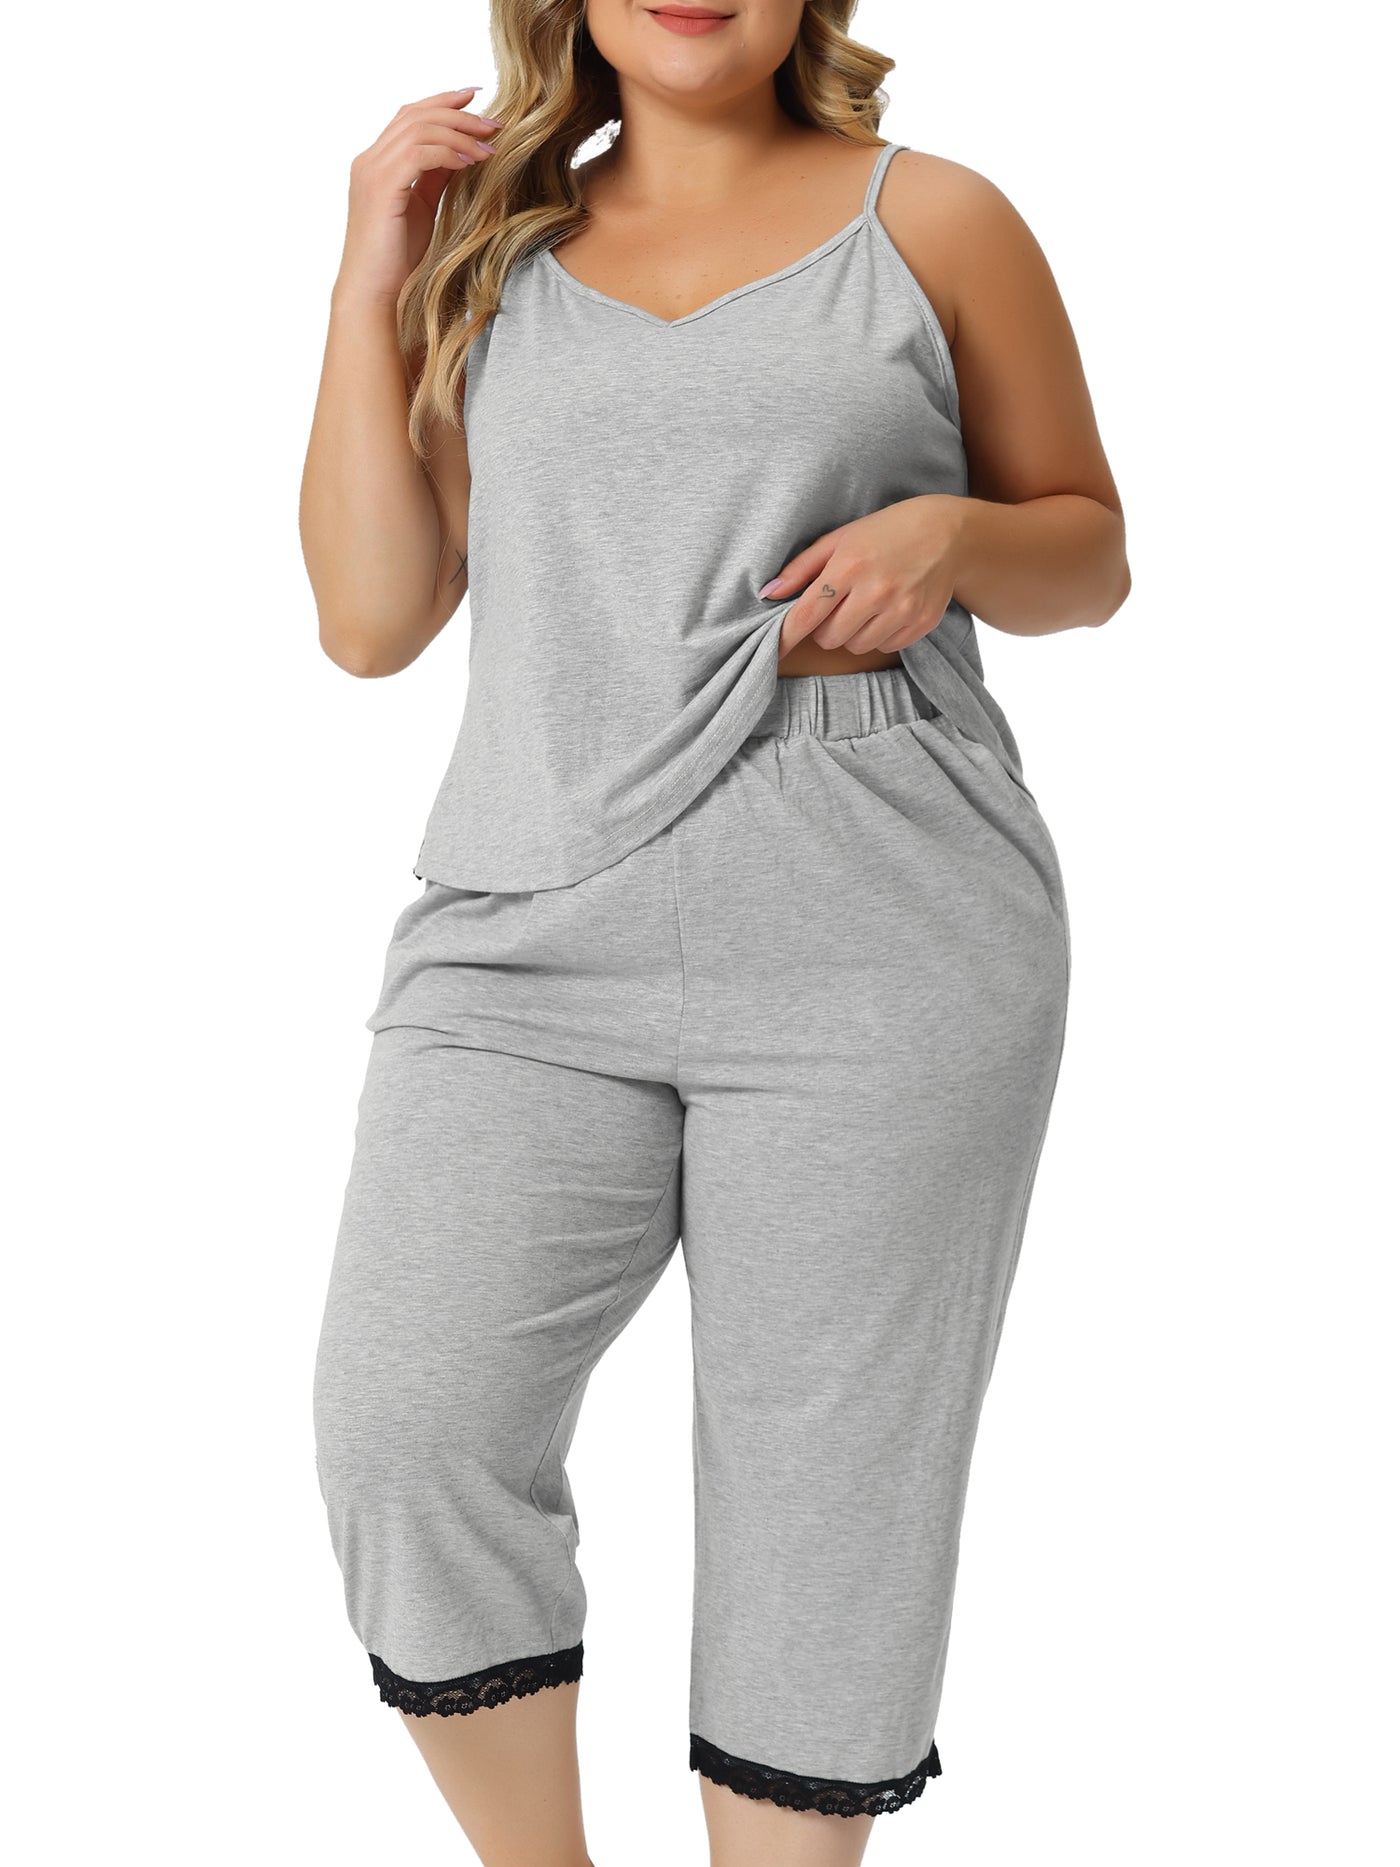 Bublédon Plus Size Pajamas Sets for Women Lace Trim V-Neck Cami Top Capri Pants Elastic Soft Nightwear Sleepwear